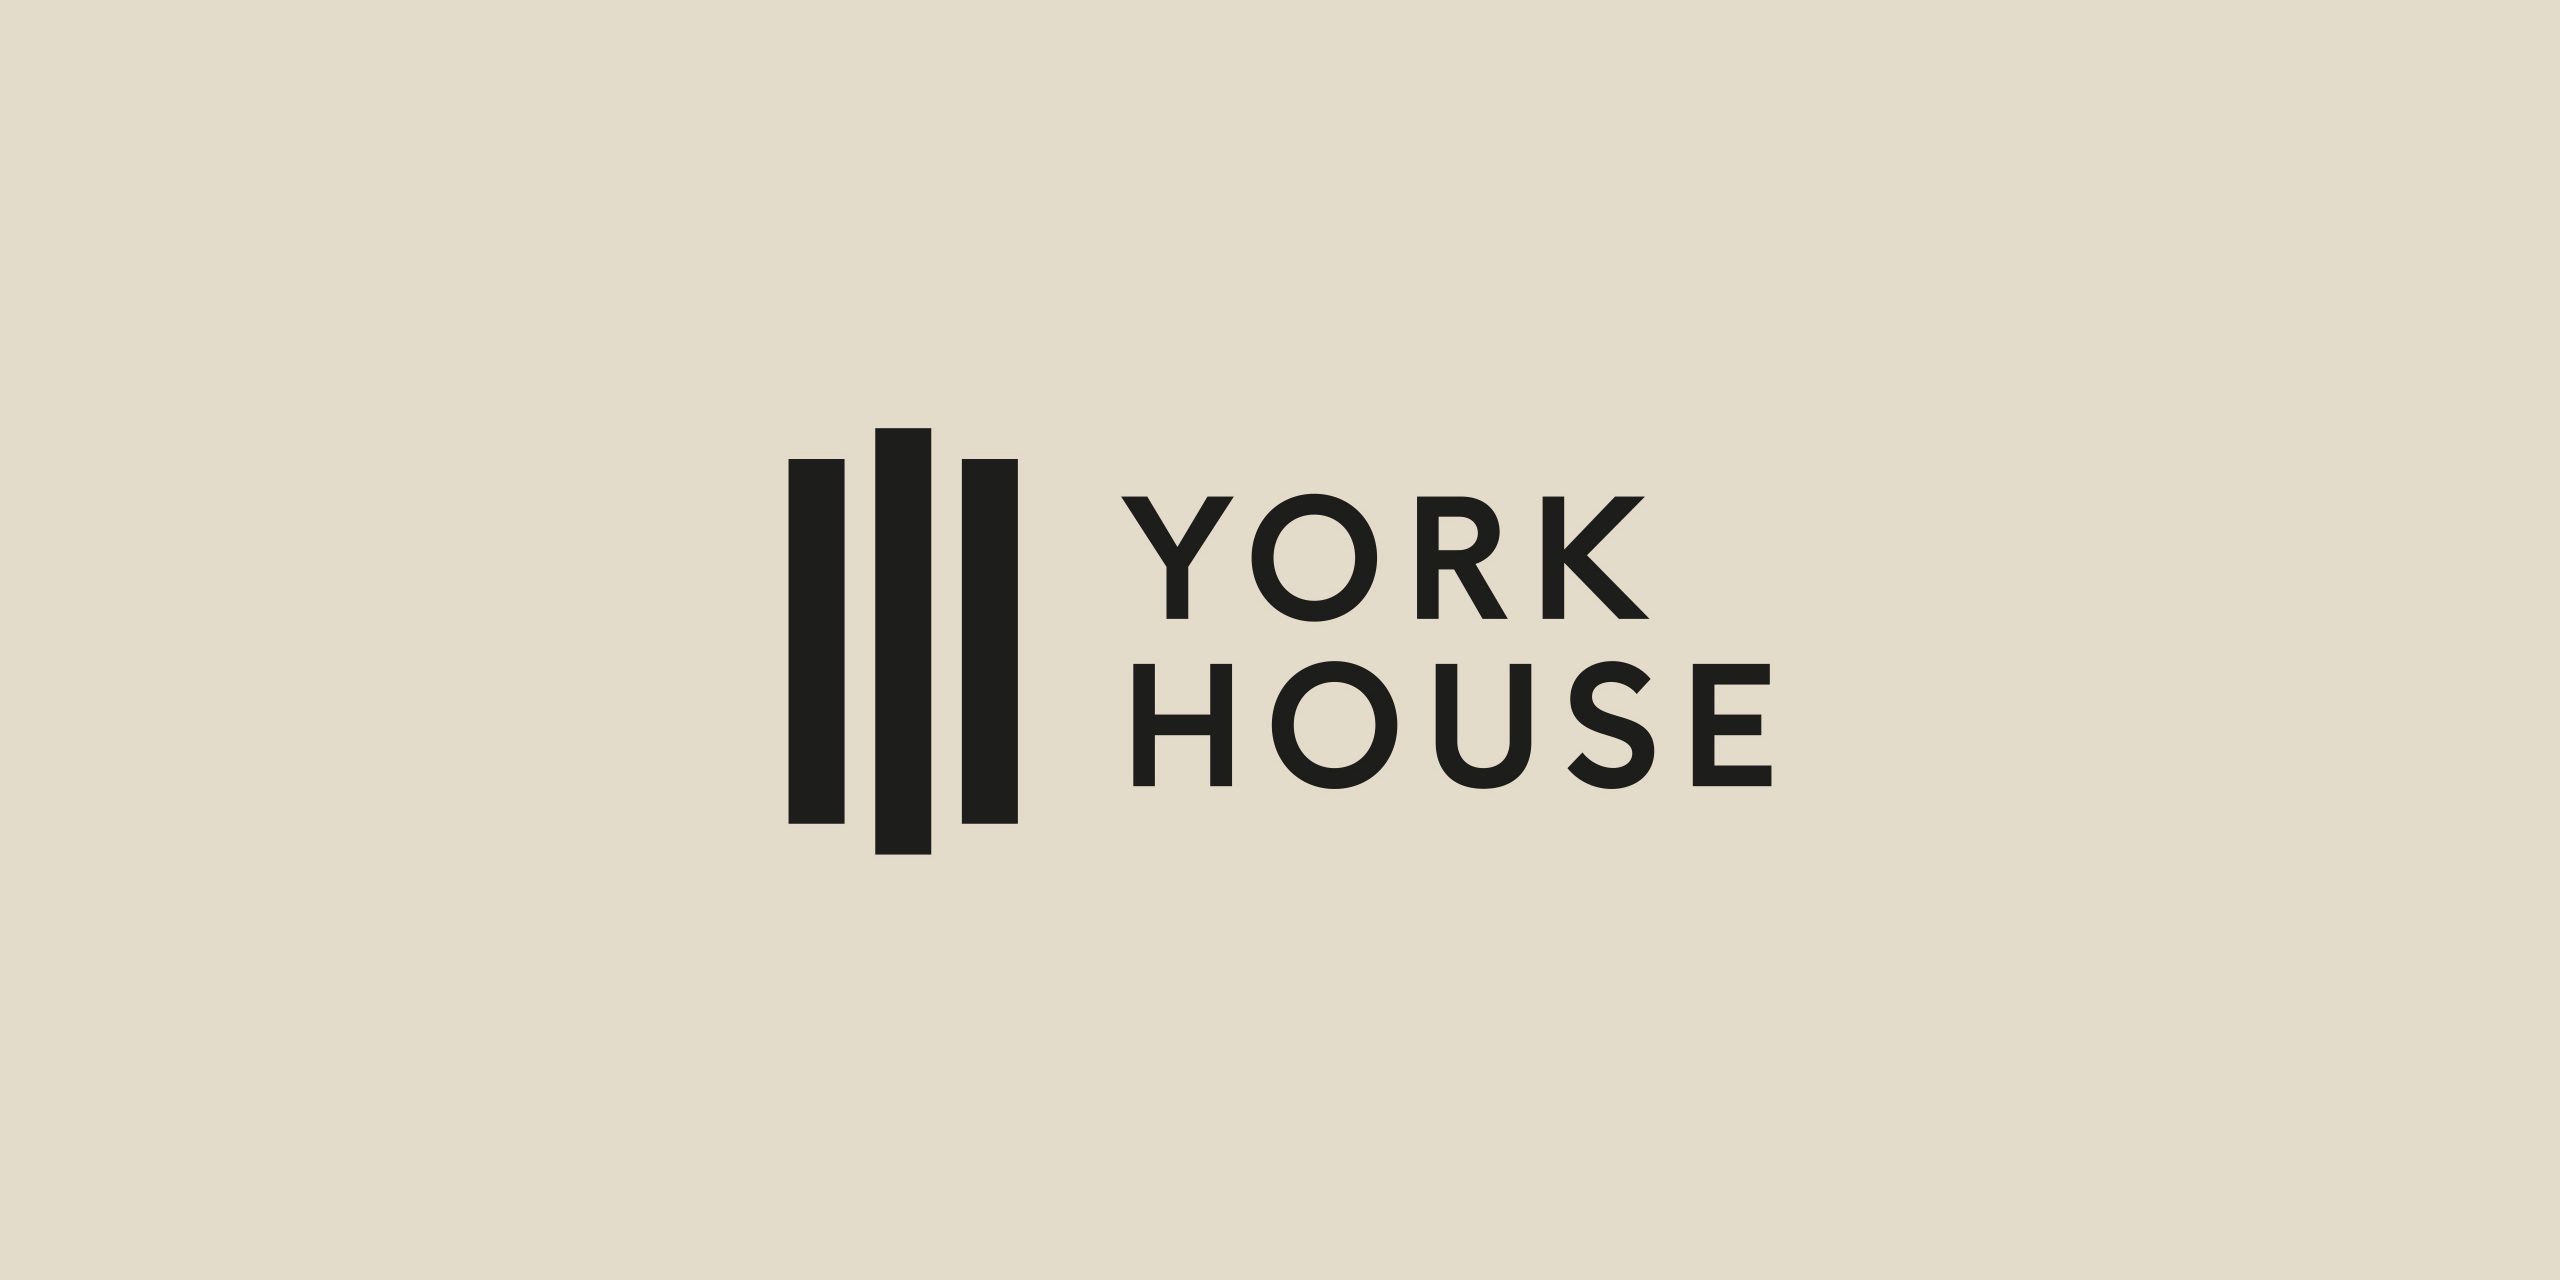 YorkHouse-image1